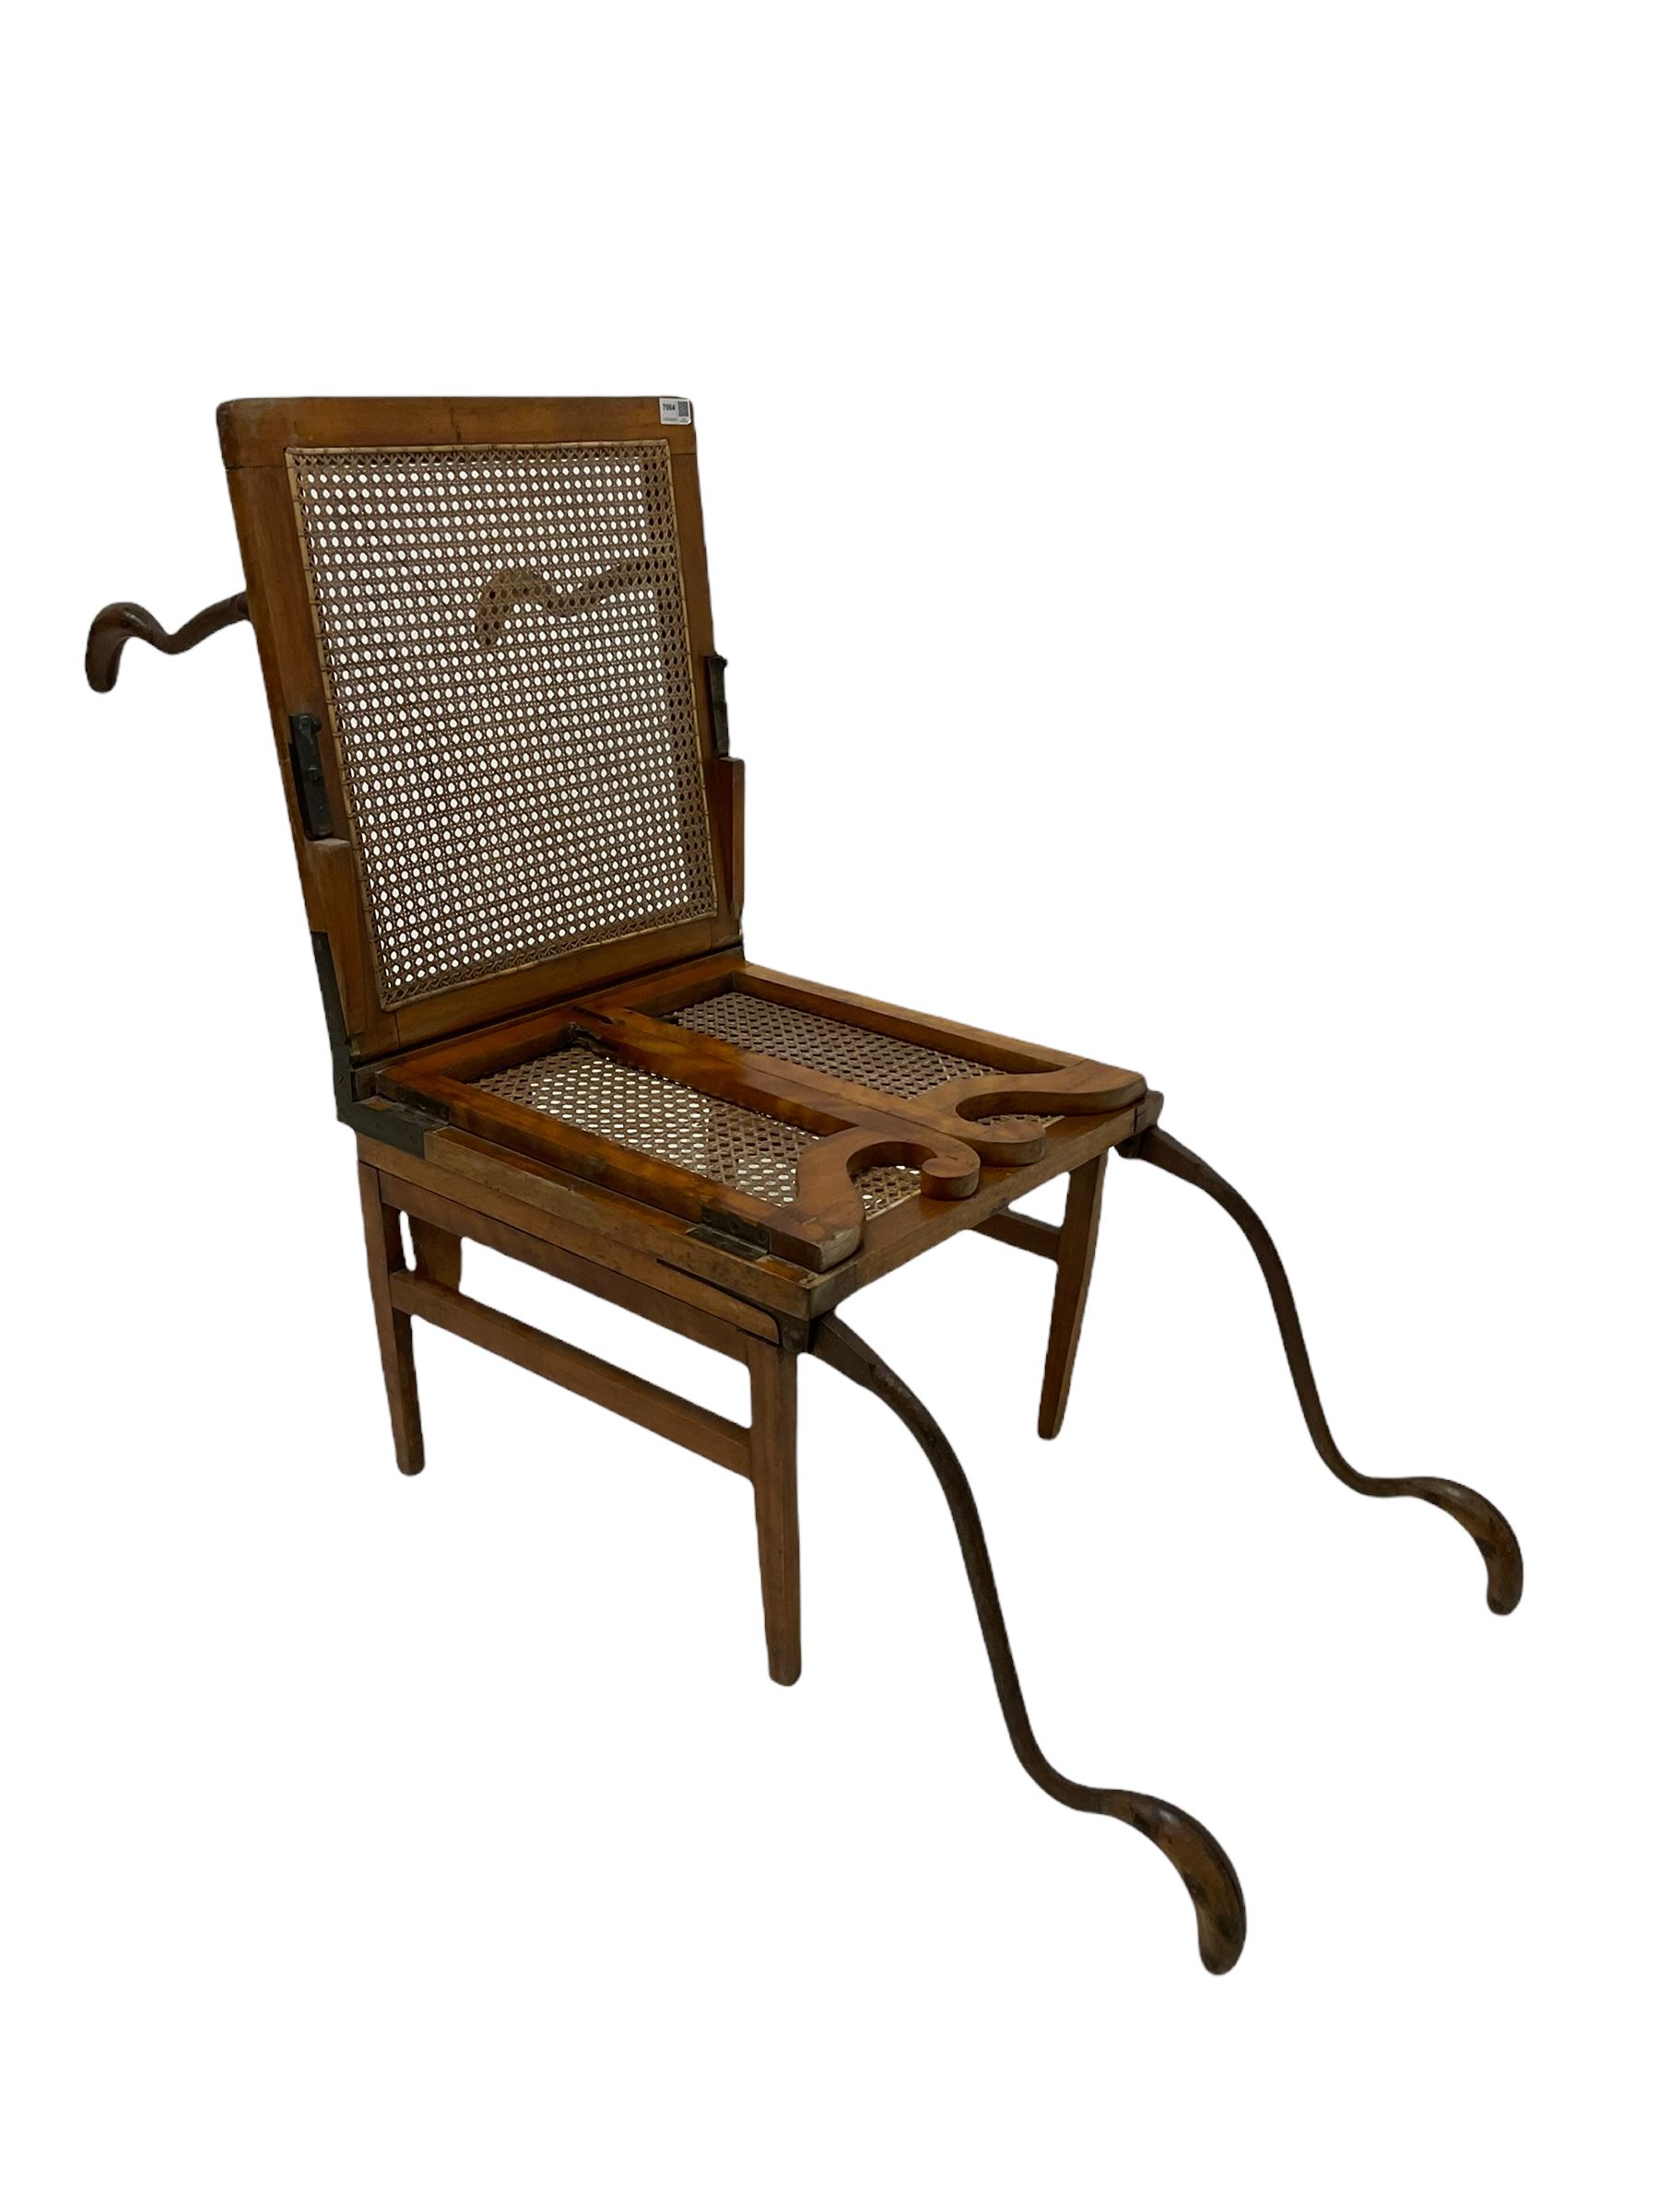 J. Alderman folding Sudan or invalid chair - Image 2 of 6